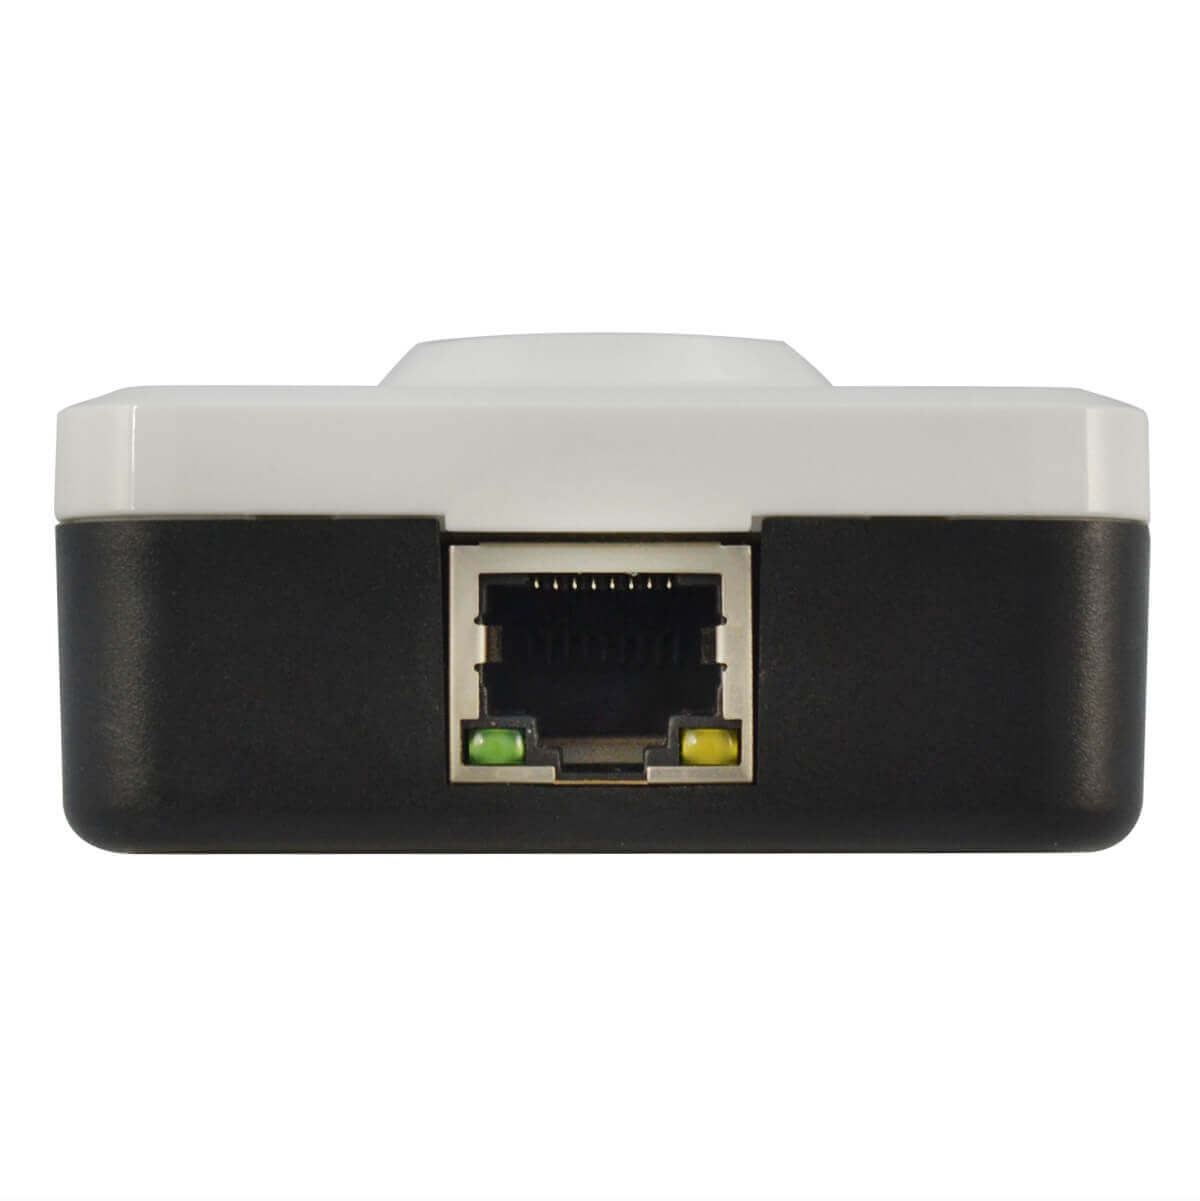 Mini camara IP, Sensor CMOS 1/4, resolucion 0.3Mp, MJPEG, P2P